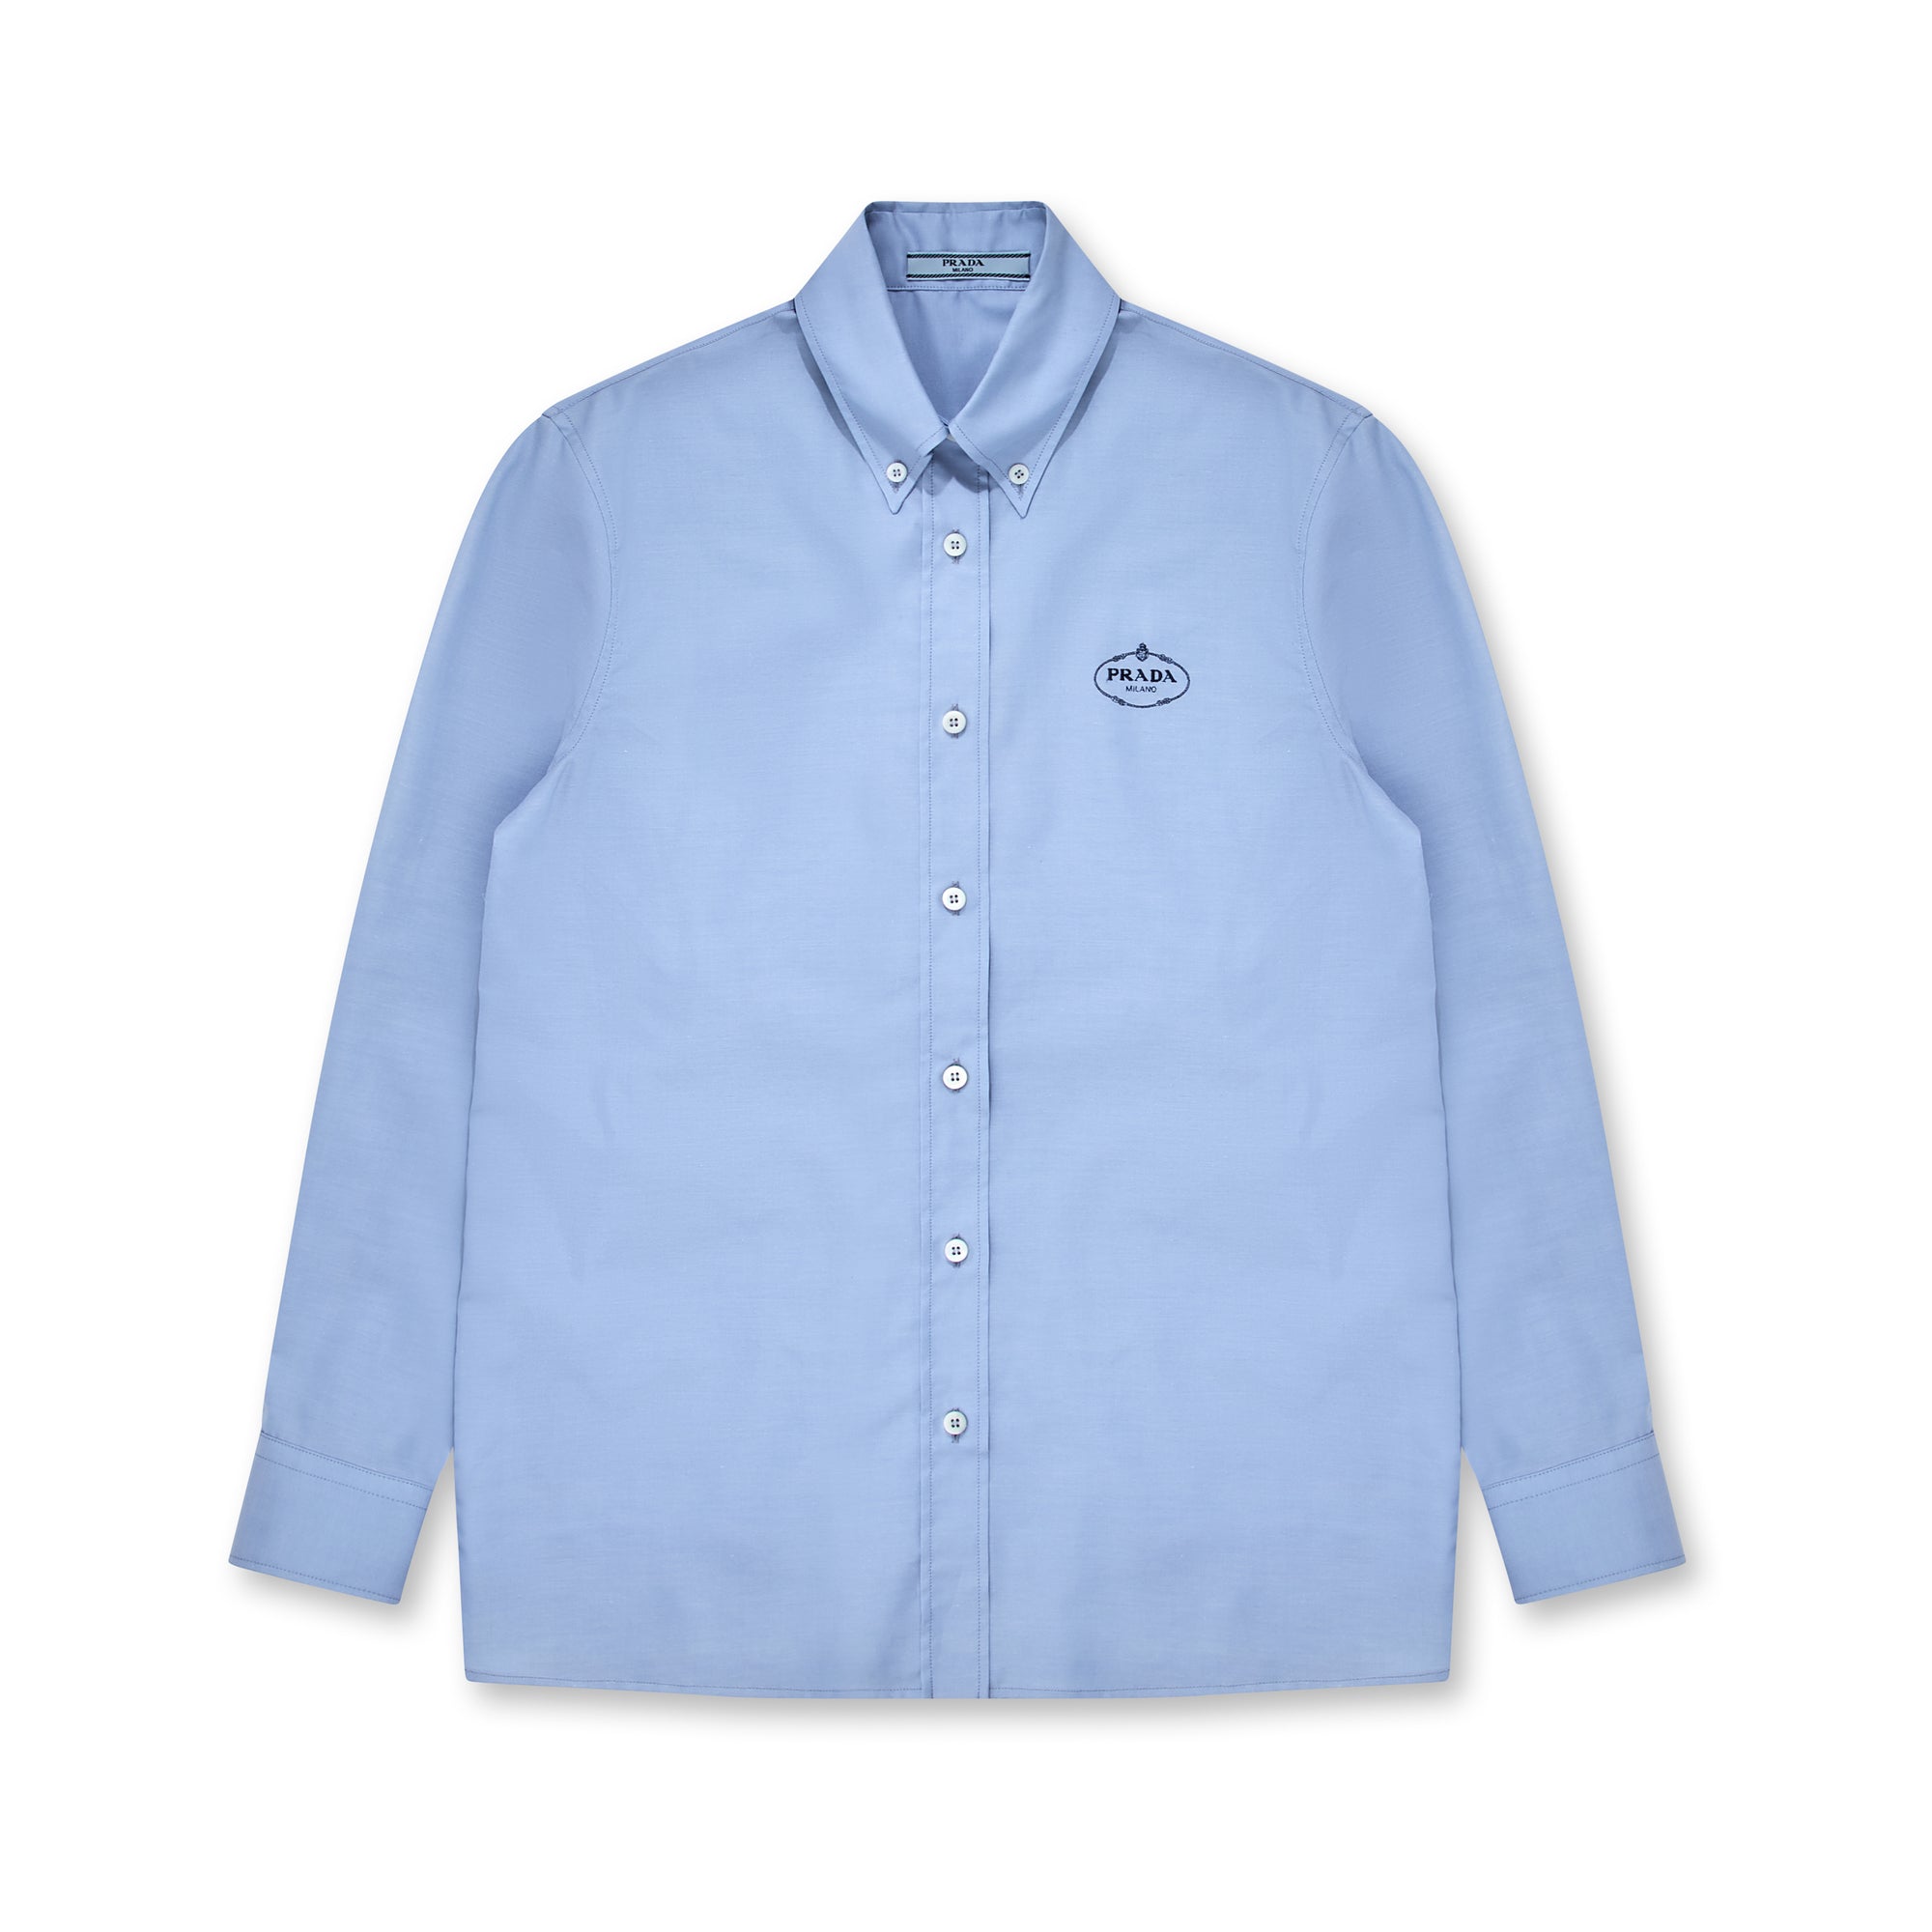 Prada - Women’s Oxford Cotton Shirt - (Light Blue) view 5